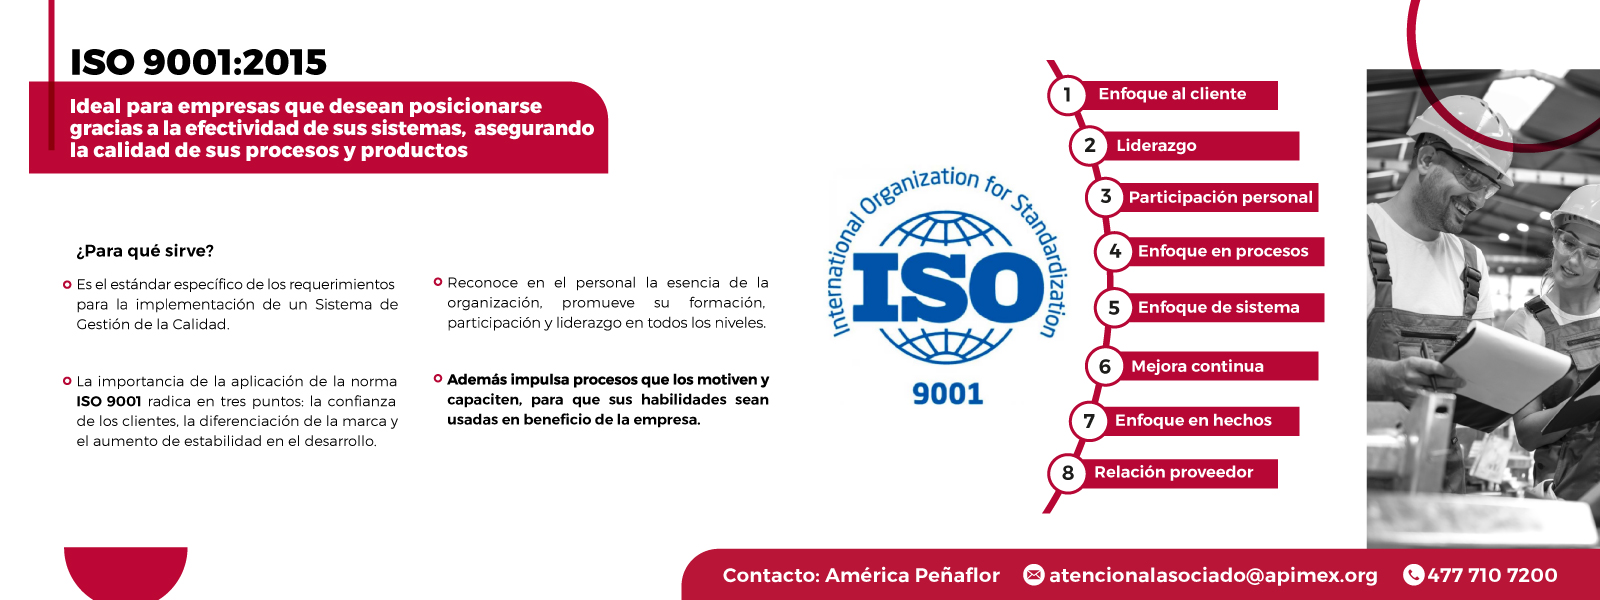 ISO APIMEX